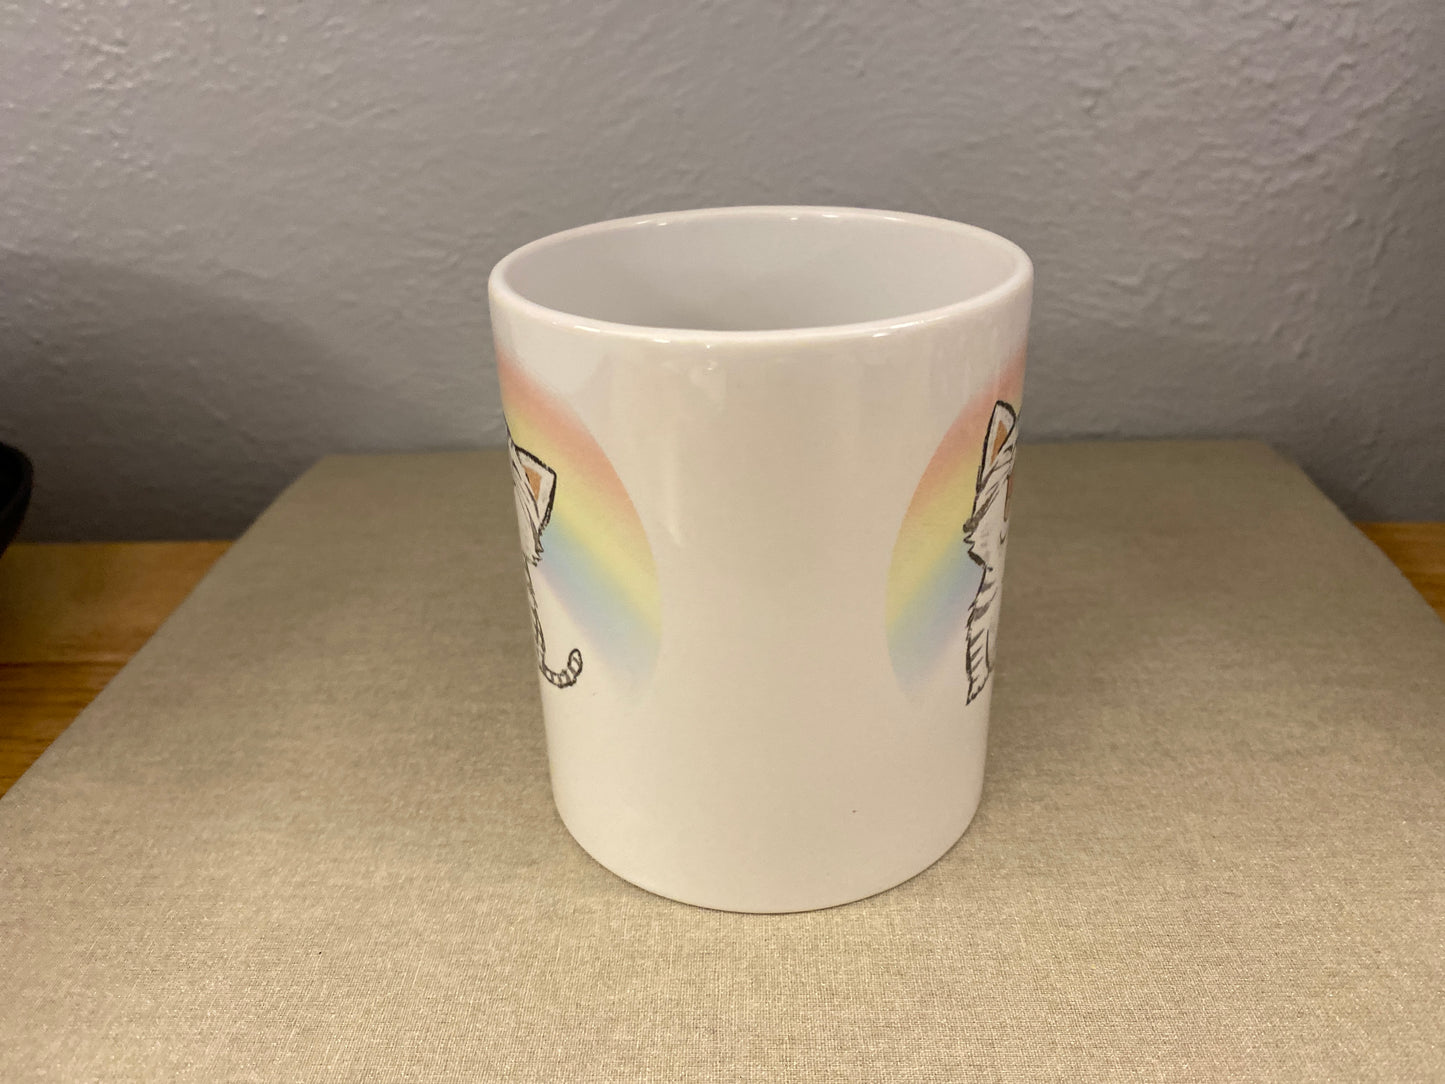 Circle Rainbow Singing Cat mug, custom coffee mug, Cat Mug, coffee lovers mug, Grey Tabby Mug, custom mug, Tabby Cat Mug